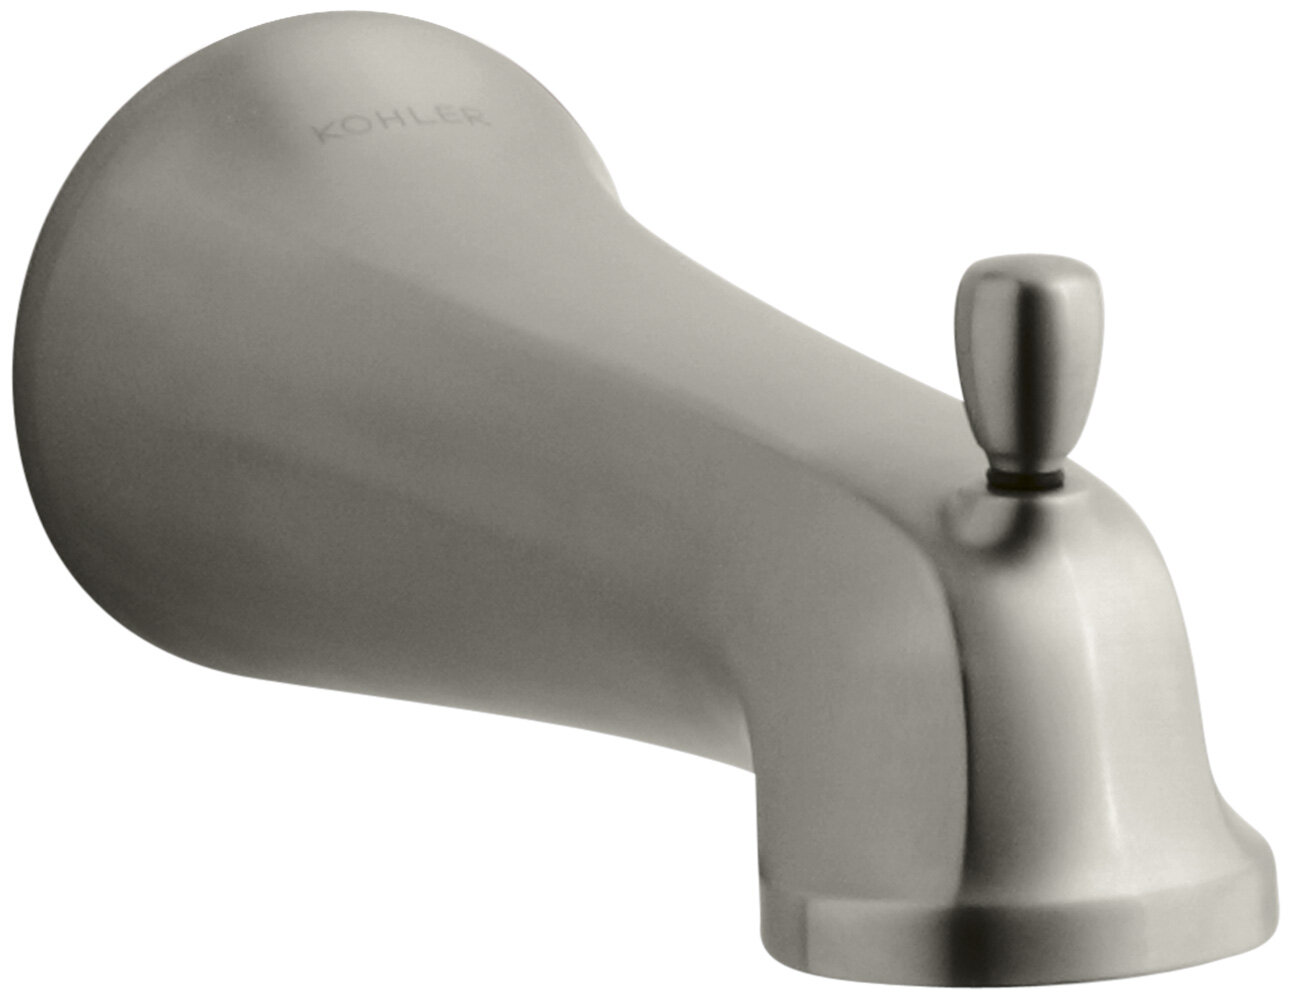 Kohler K-10588-cp Bancroft Wall-mount Diverter Bath Spout Polished Chrome for sale online